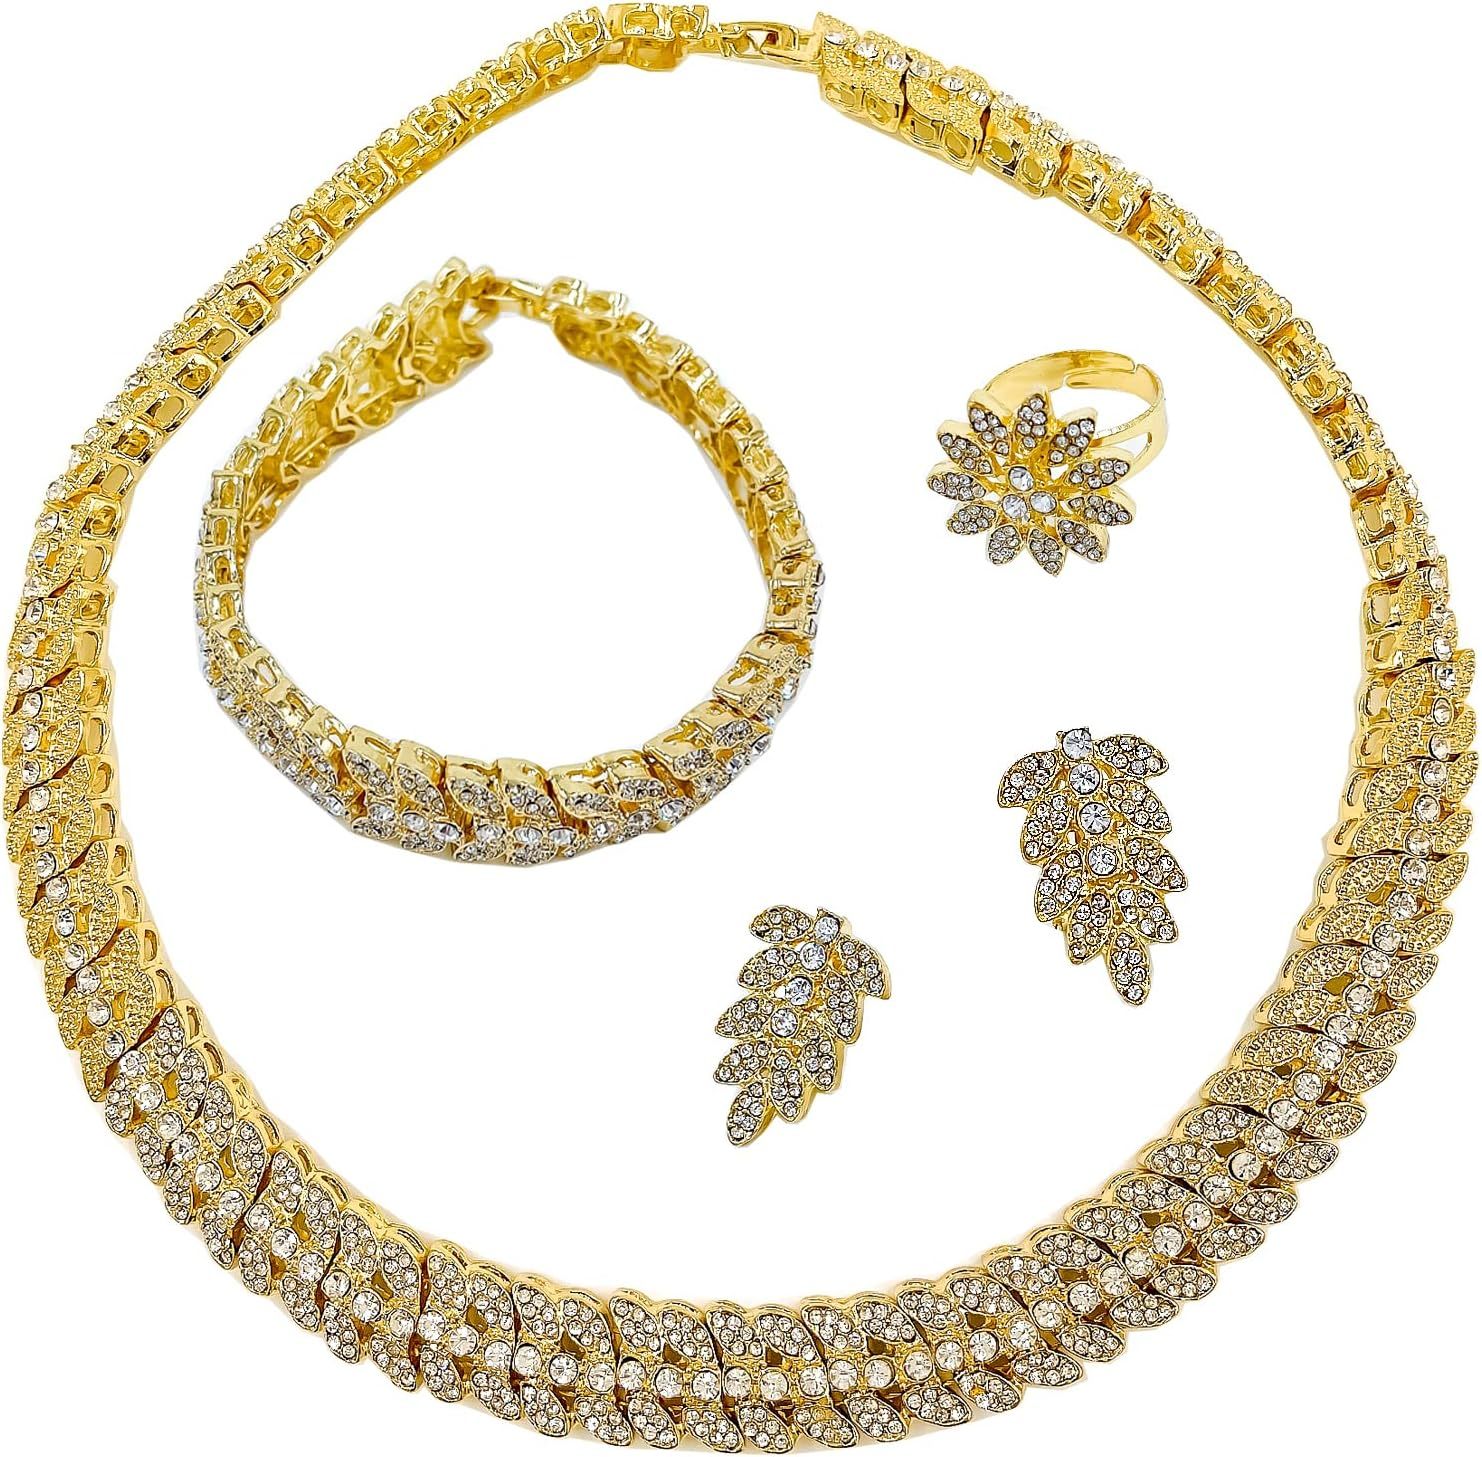 Fashion Crystal Jewelry Set - $36.24